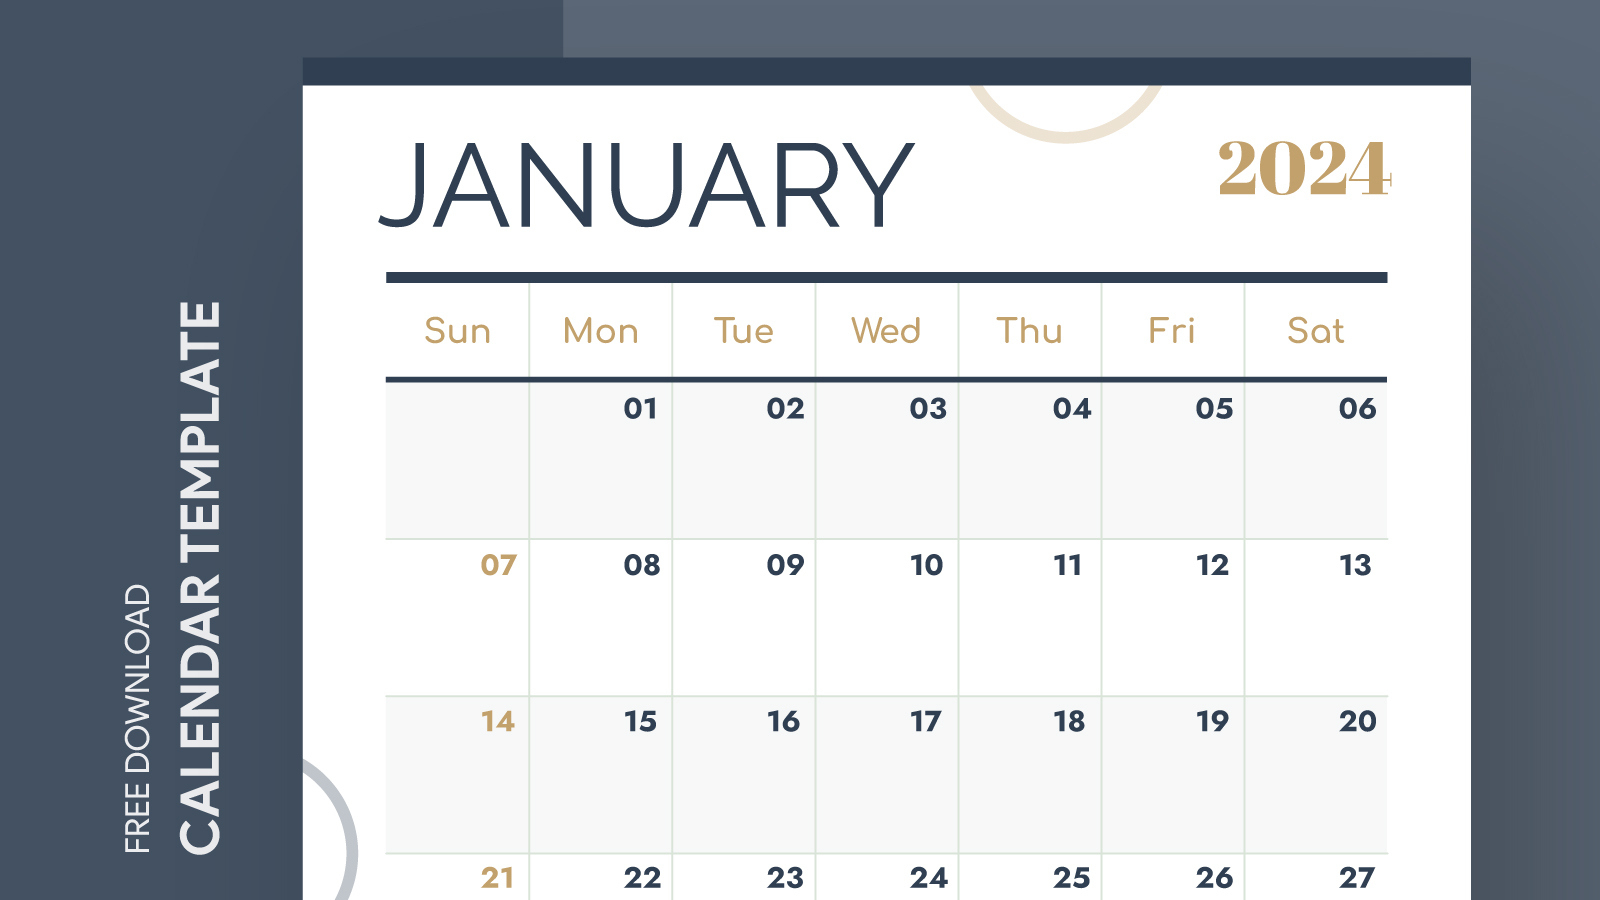 January 2024 Calendar Free Google Docs Template - Gdoc.io | Calendar Template 2024 Google Docs